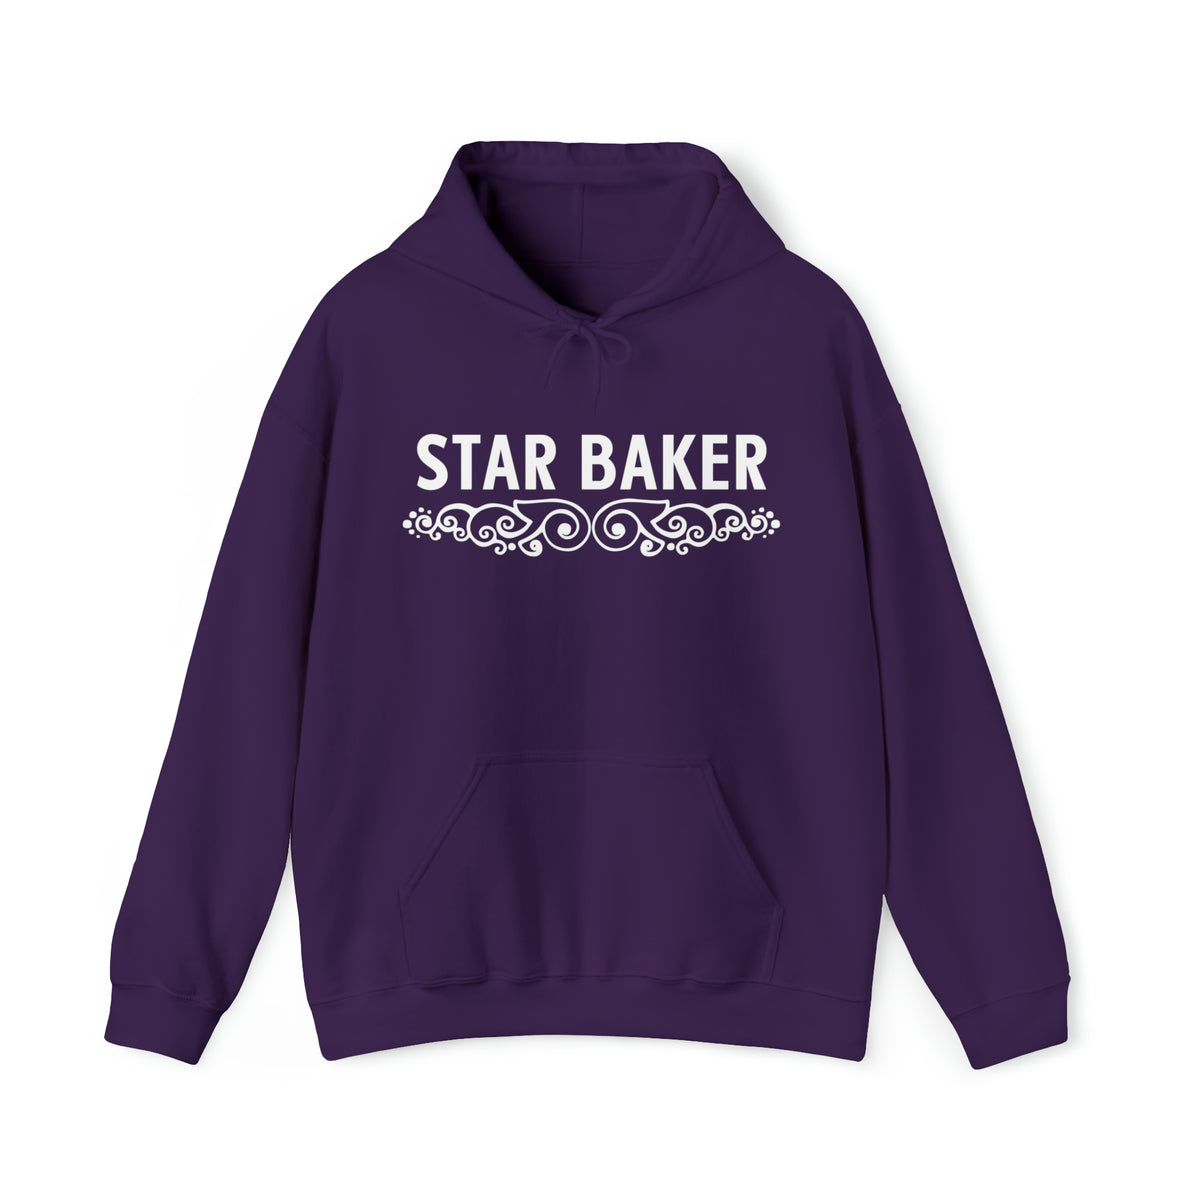 Star Baker British Baking Shirt | Baker Gifts | Unisex Hoodie Sweatshirt